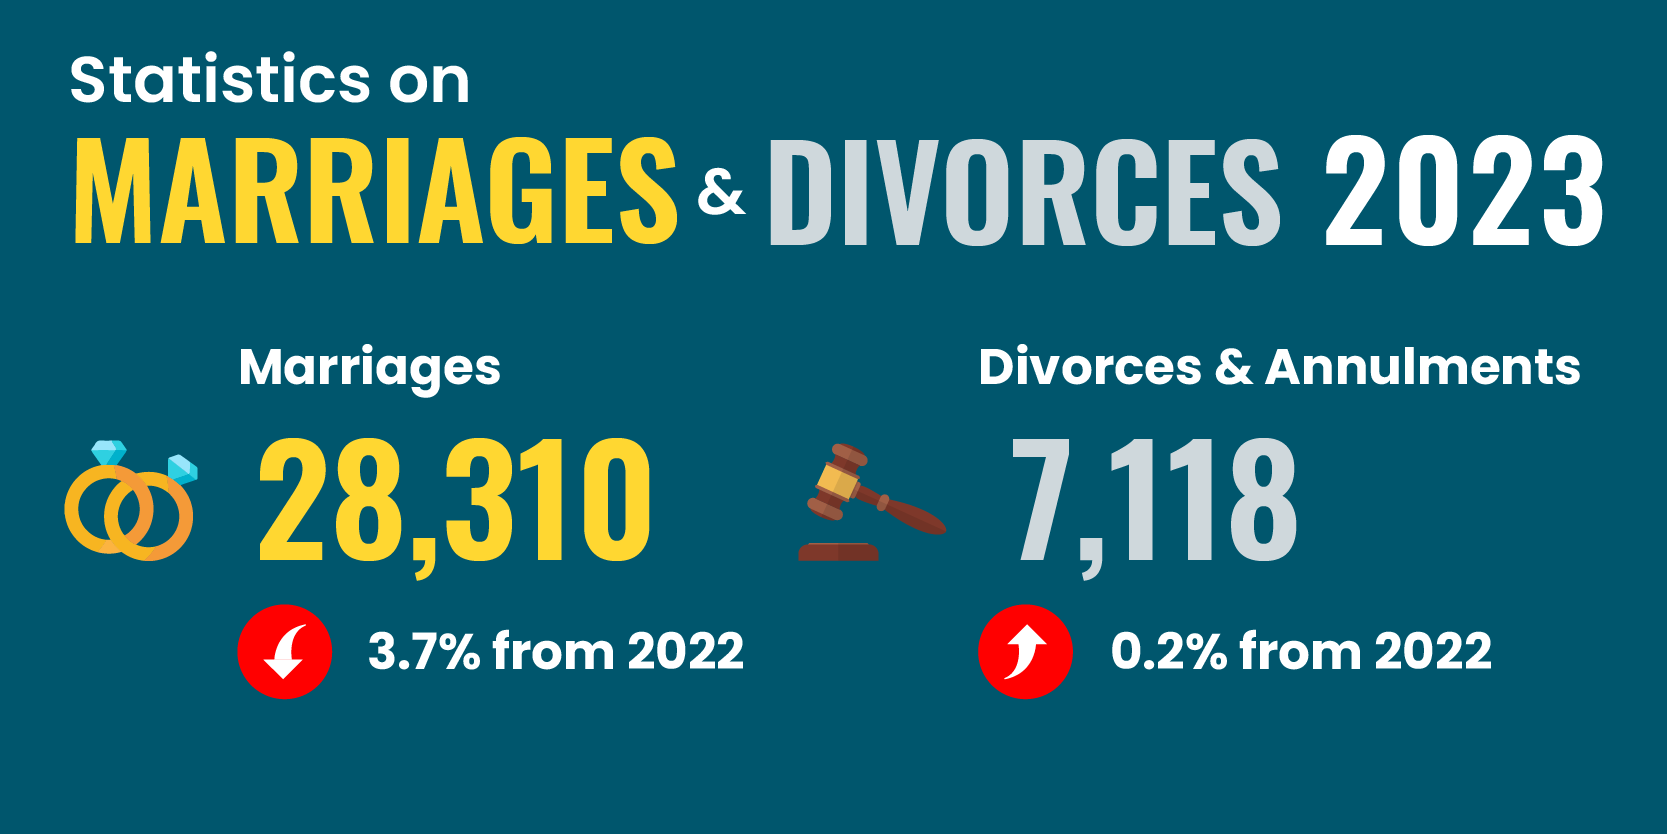 Statistics on Marriages & Divorces 2023